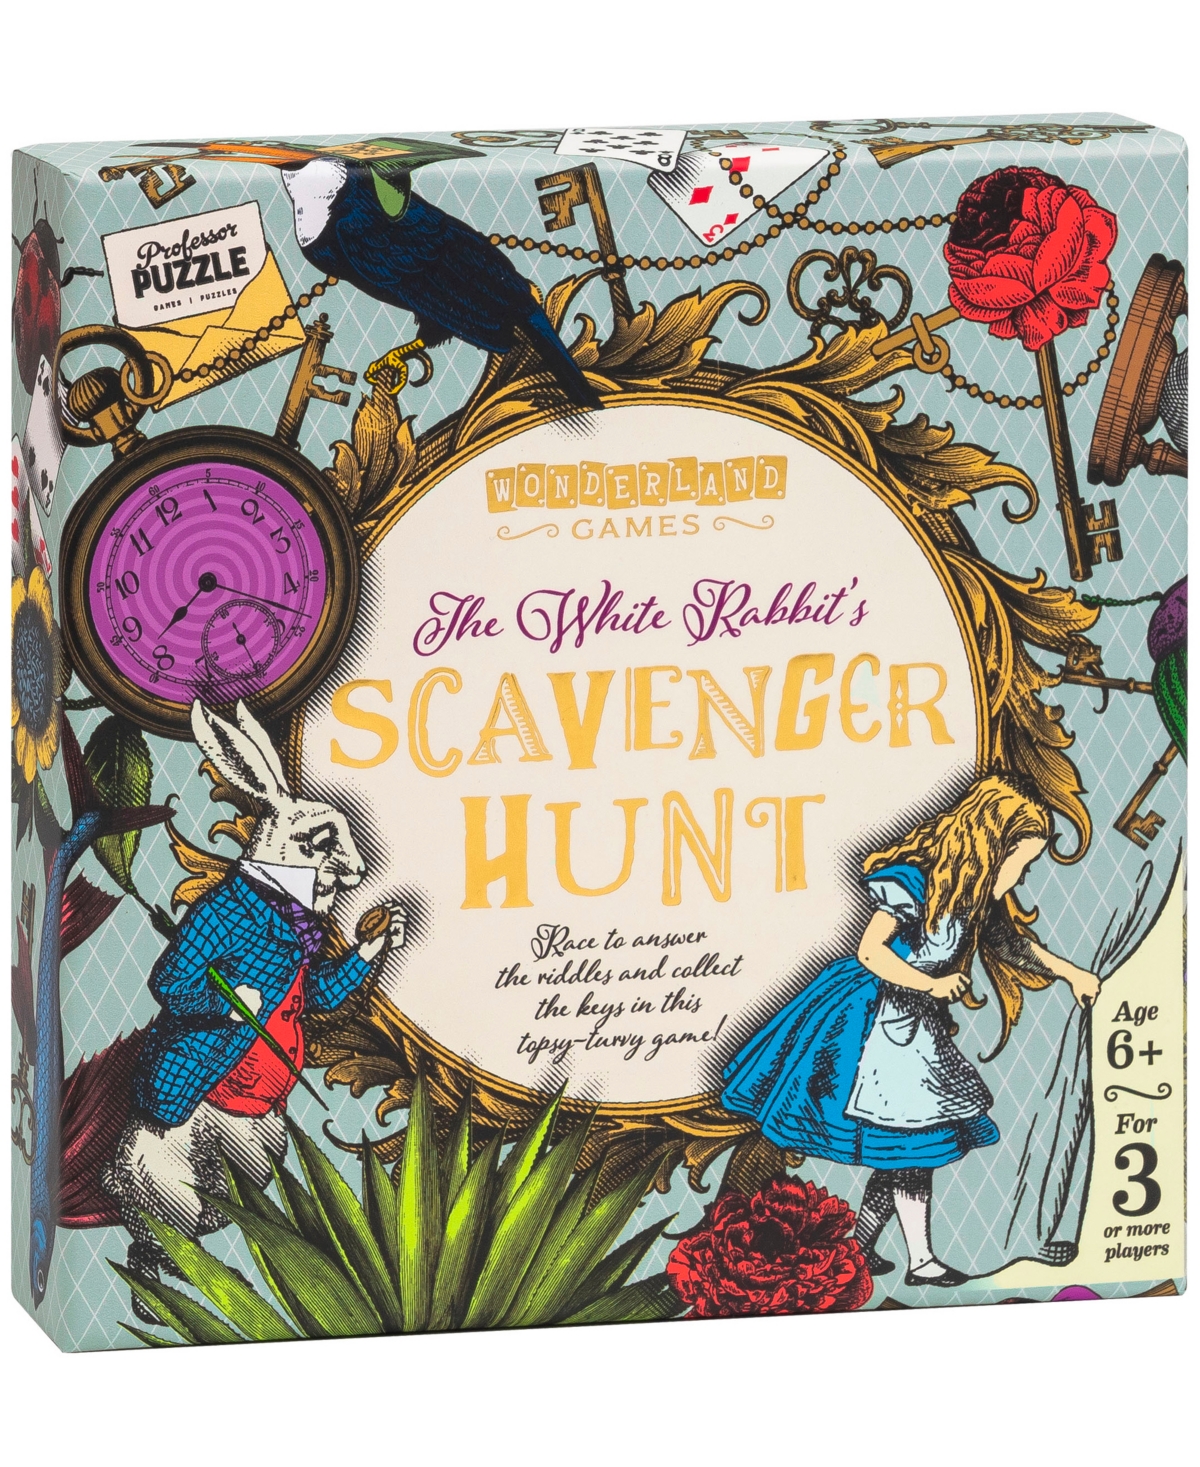 Professor Puzzle Kids' Wonderland Games The White Rabbit's Scavenger Hunt Puzzle Set, 42 Piece In Multi Color